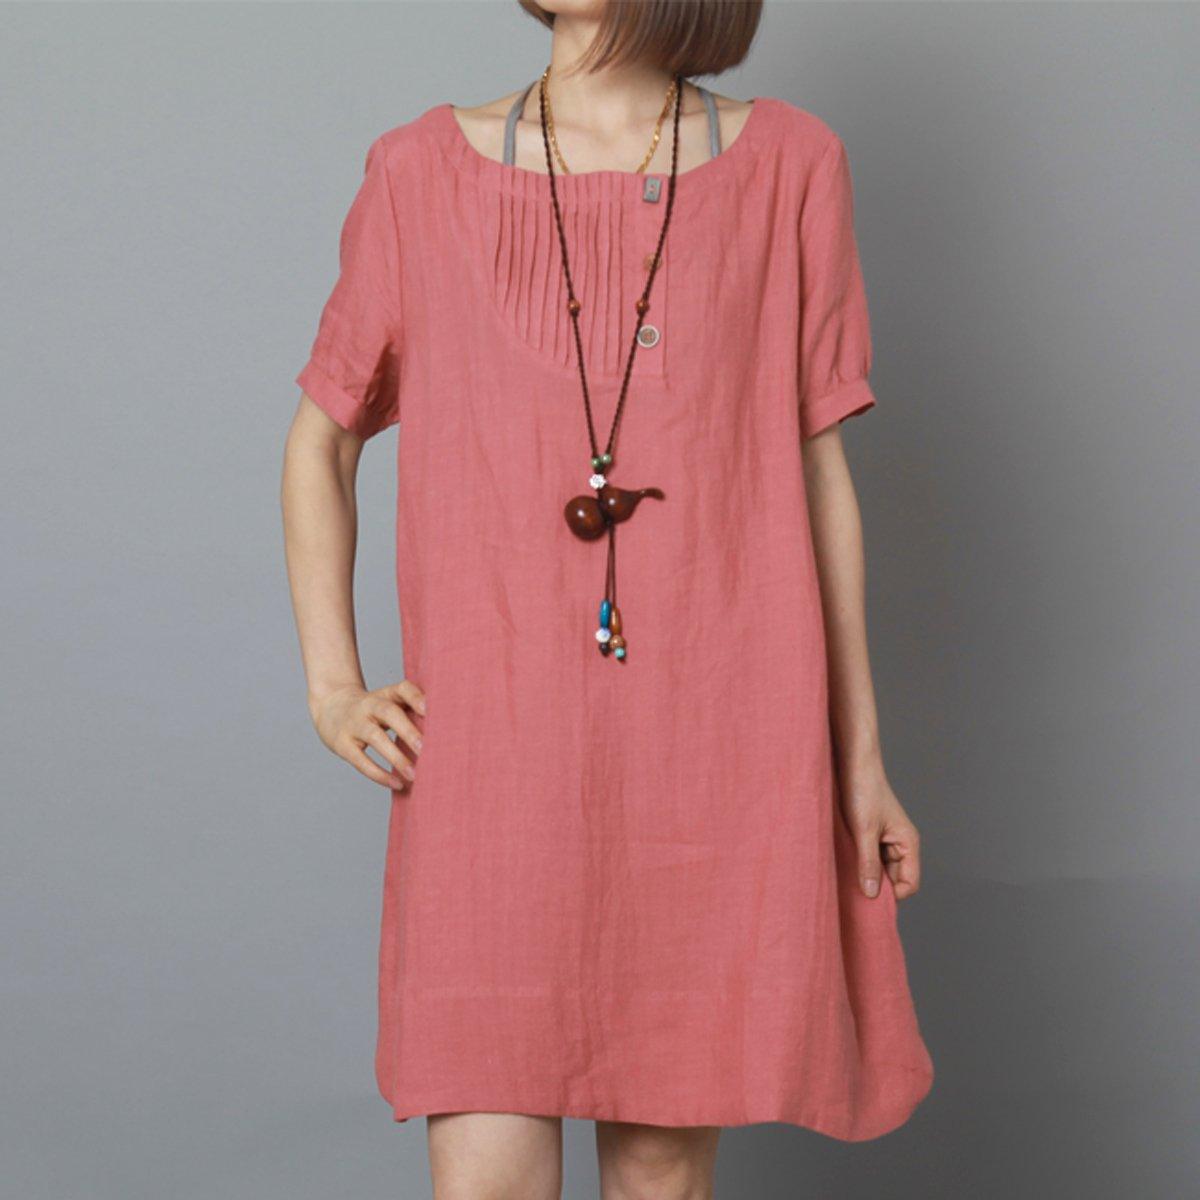 Pink summer linen dress oversize sundress plus size shift dress - Omychic